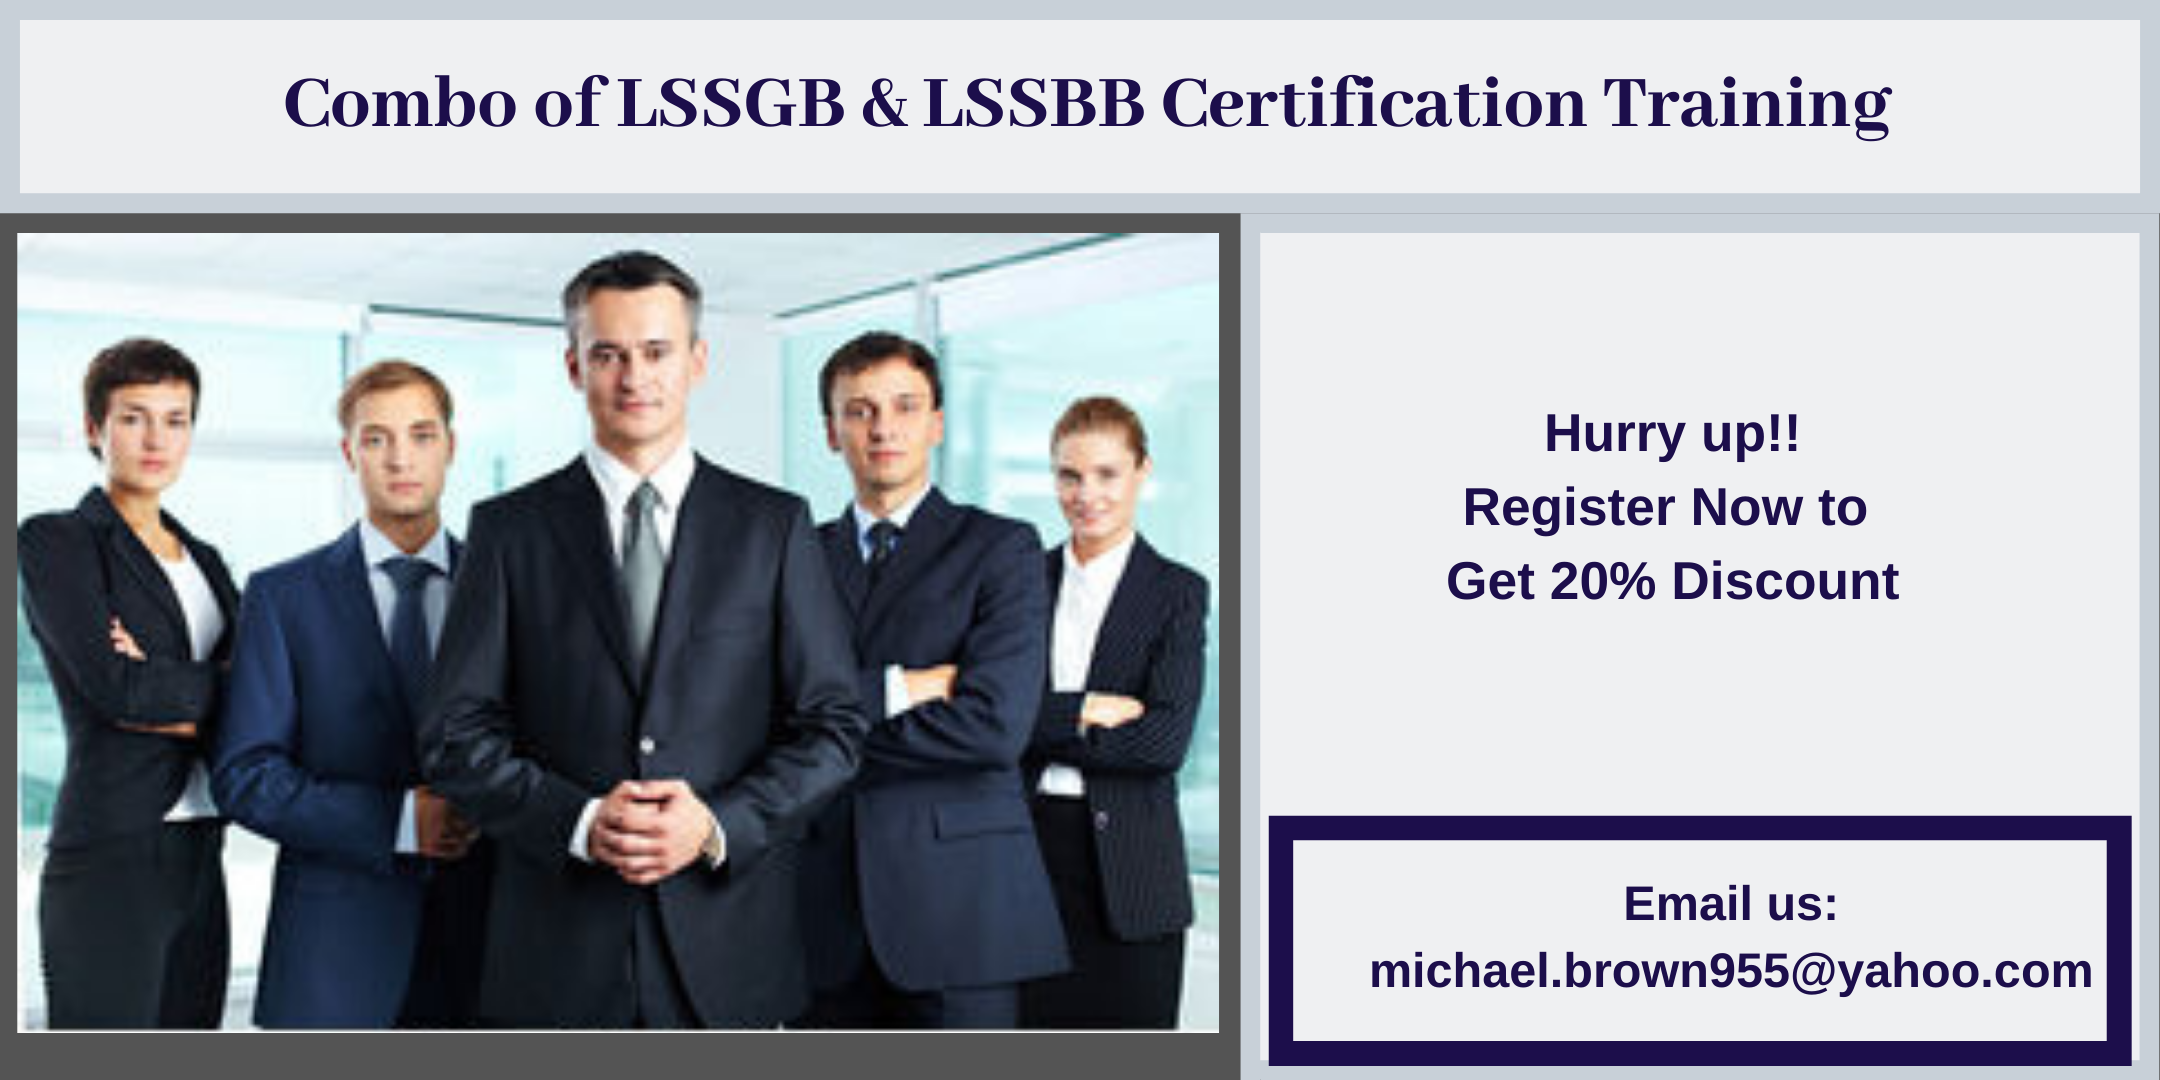 Combo of LSSGB & LSSBB 4 days Certification Training in Santa Barbara, CA